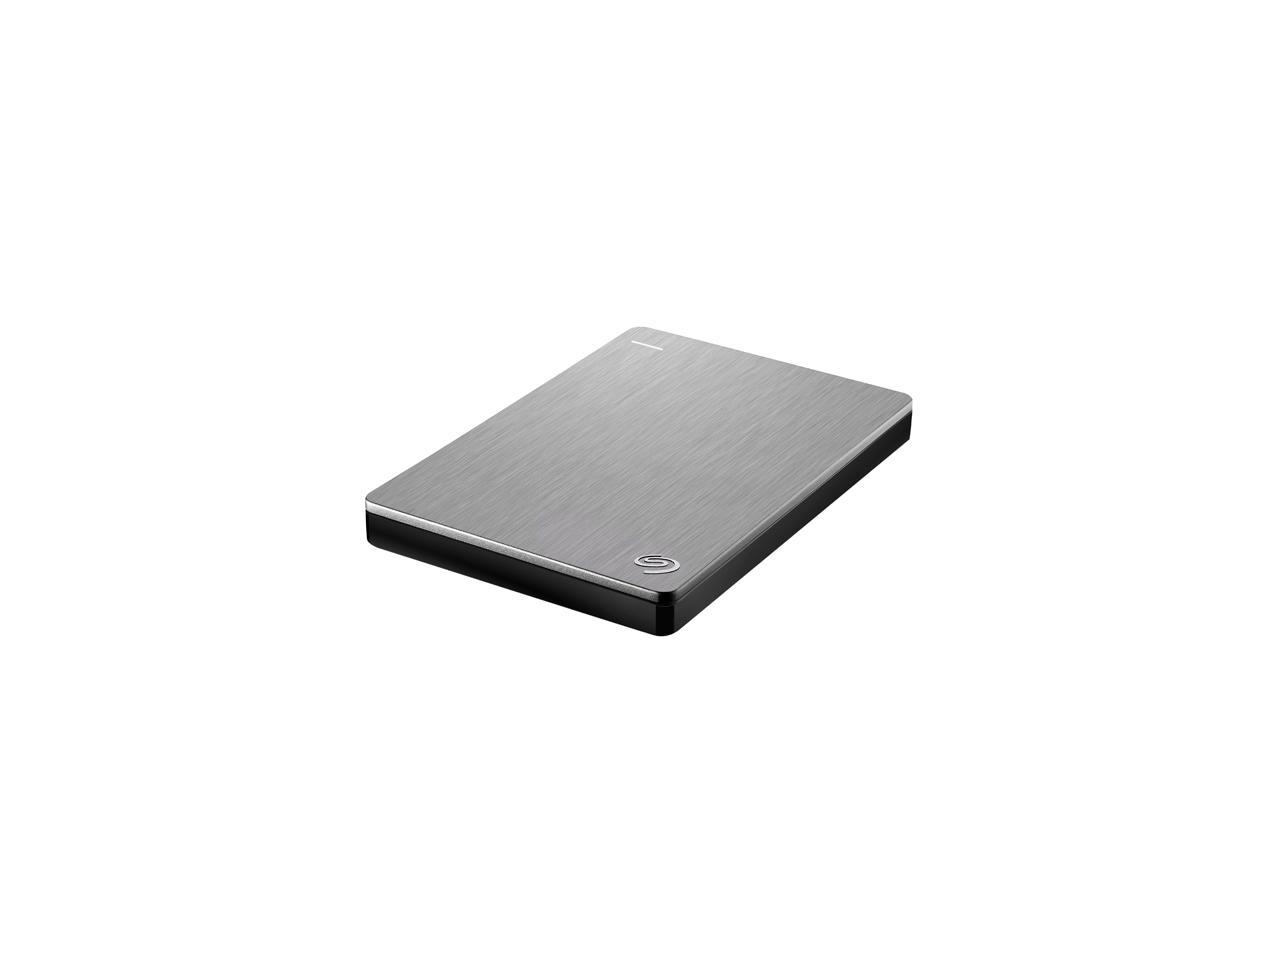 Seagate Backup Plus Slim 2TB USB 3.0 Portable External Hard Drive - STDR2000101 (Silver)